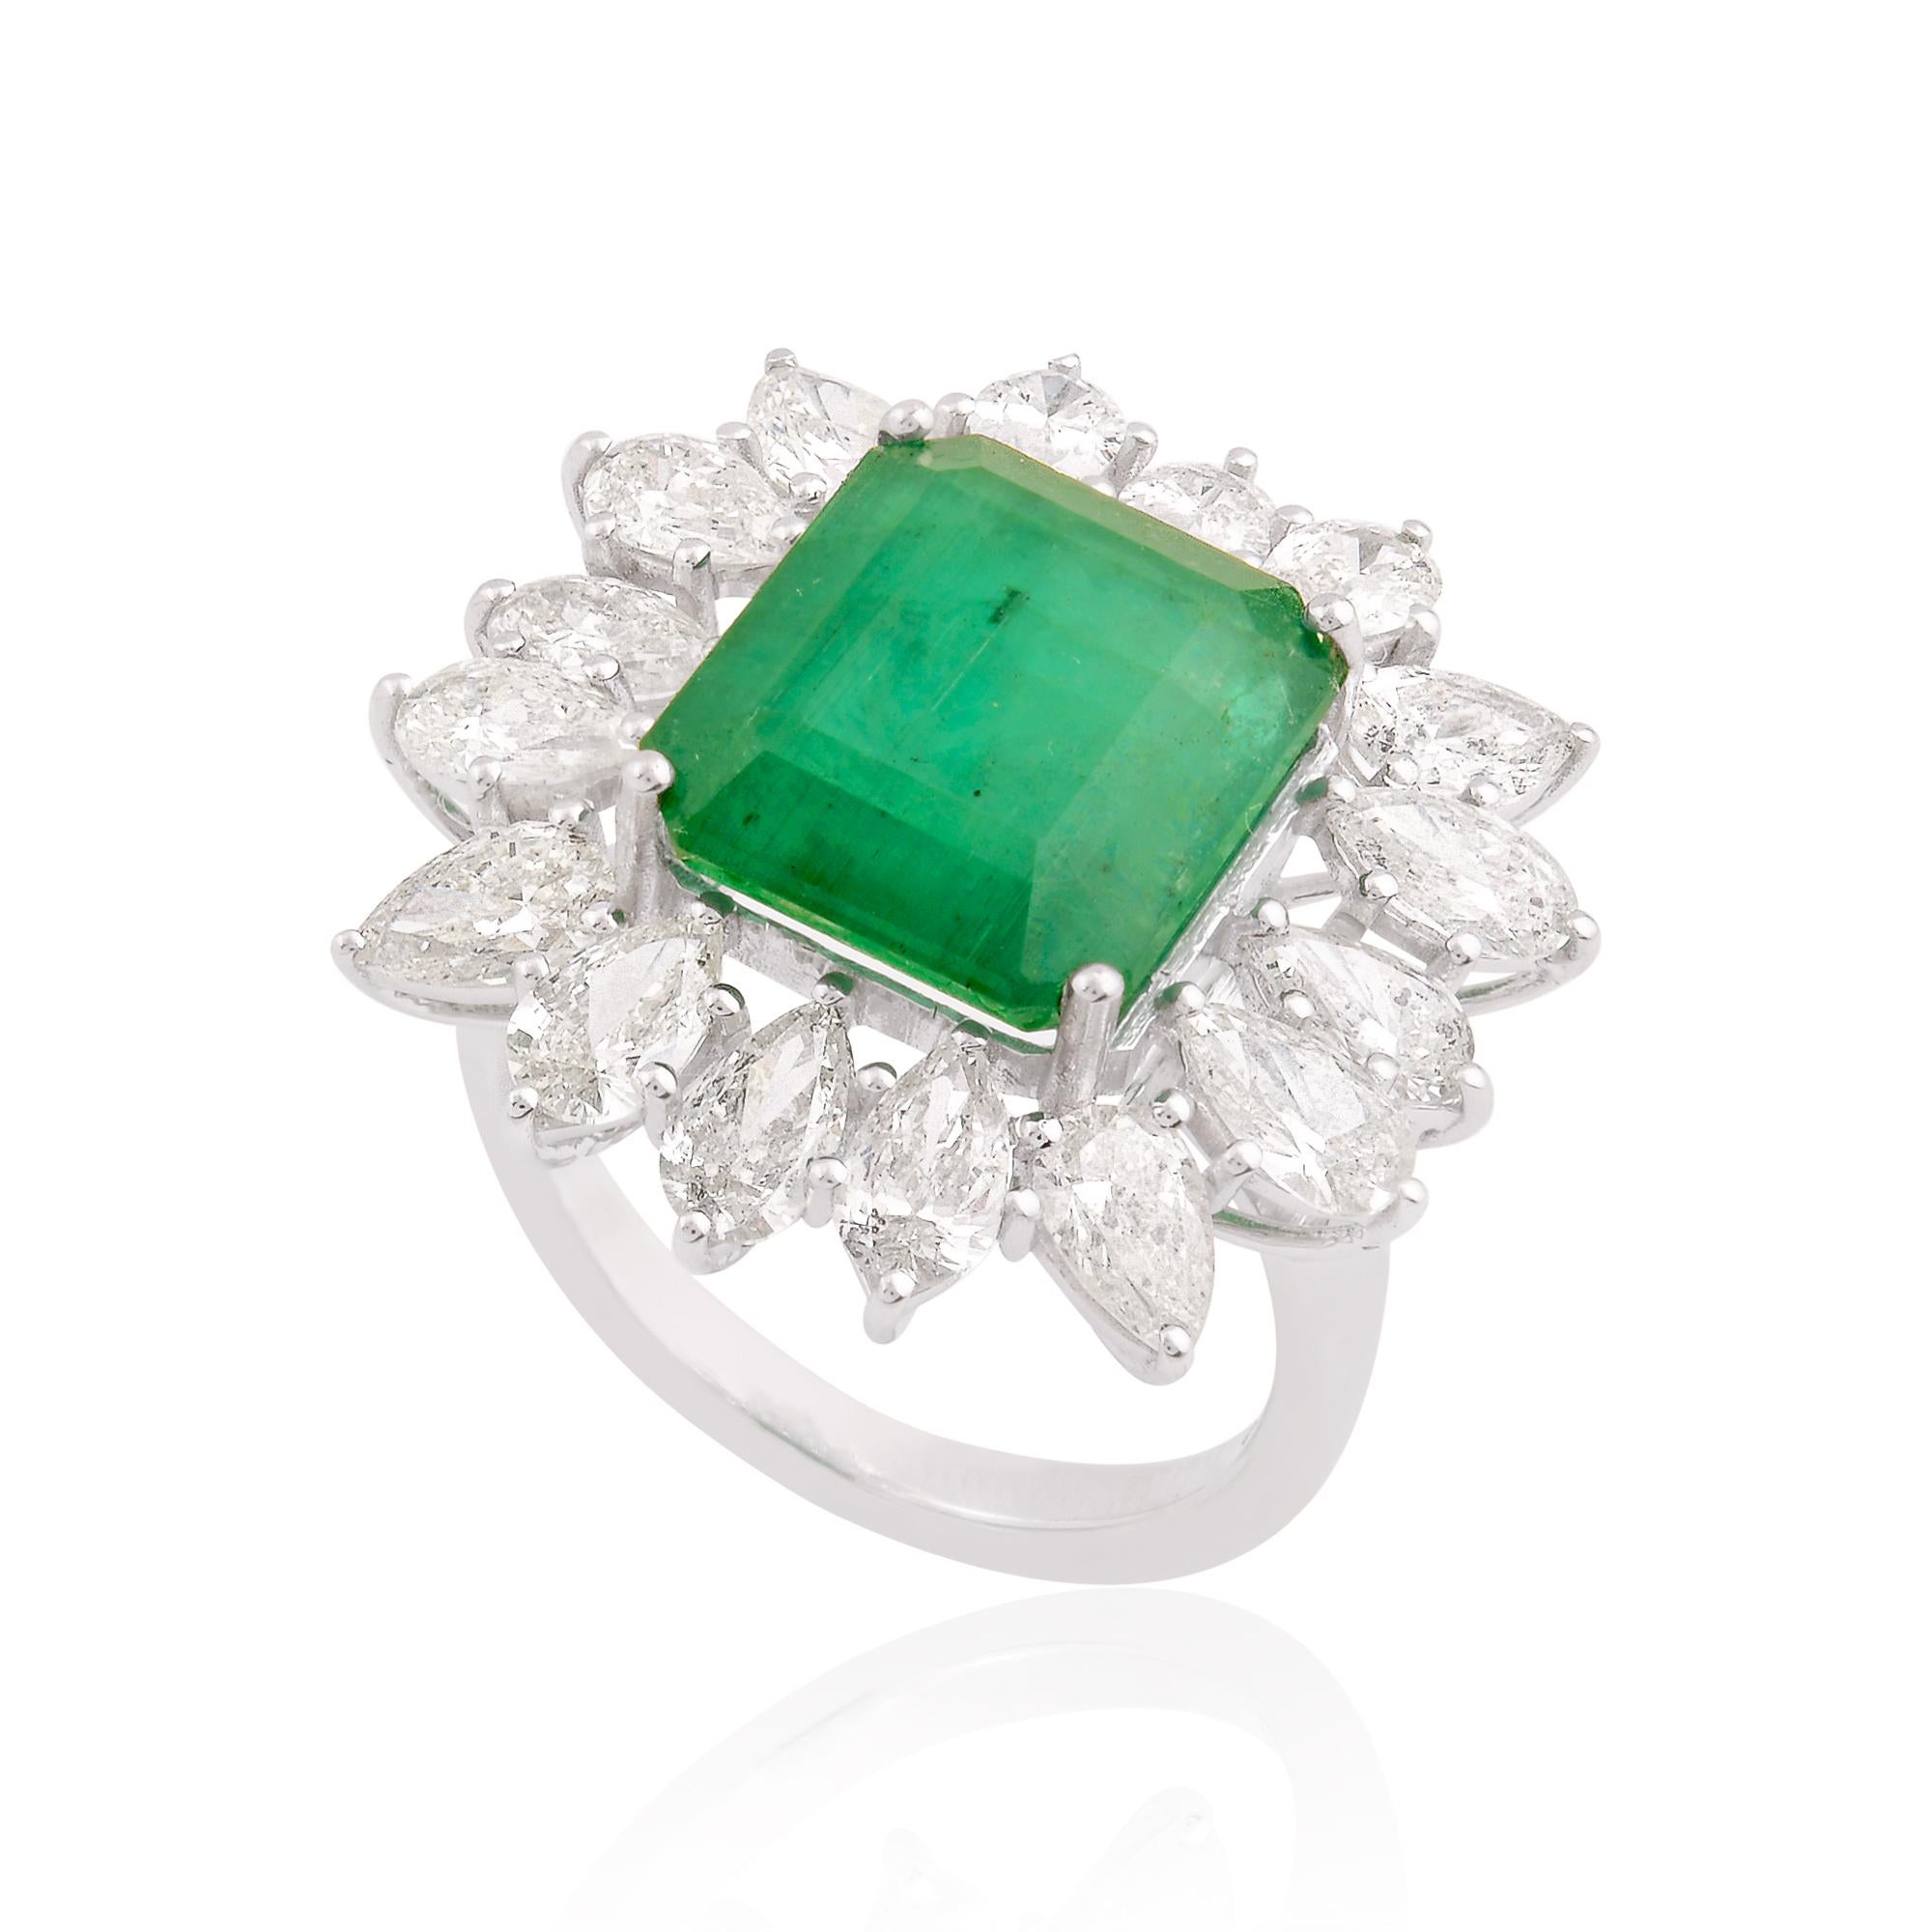 Emerald Cut Zambian Emerald Cocktail Ring Pear Diamond Solid 14k White Gold Fine Jewelry For Sale